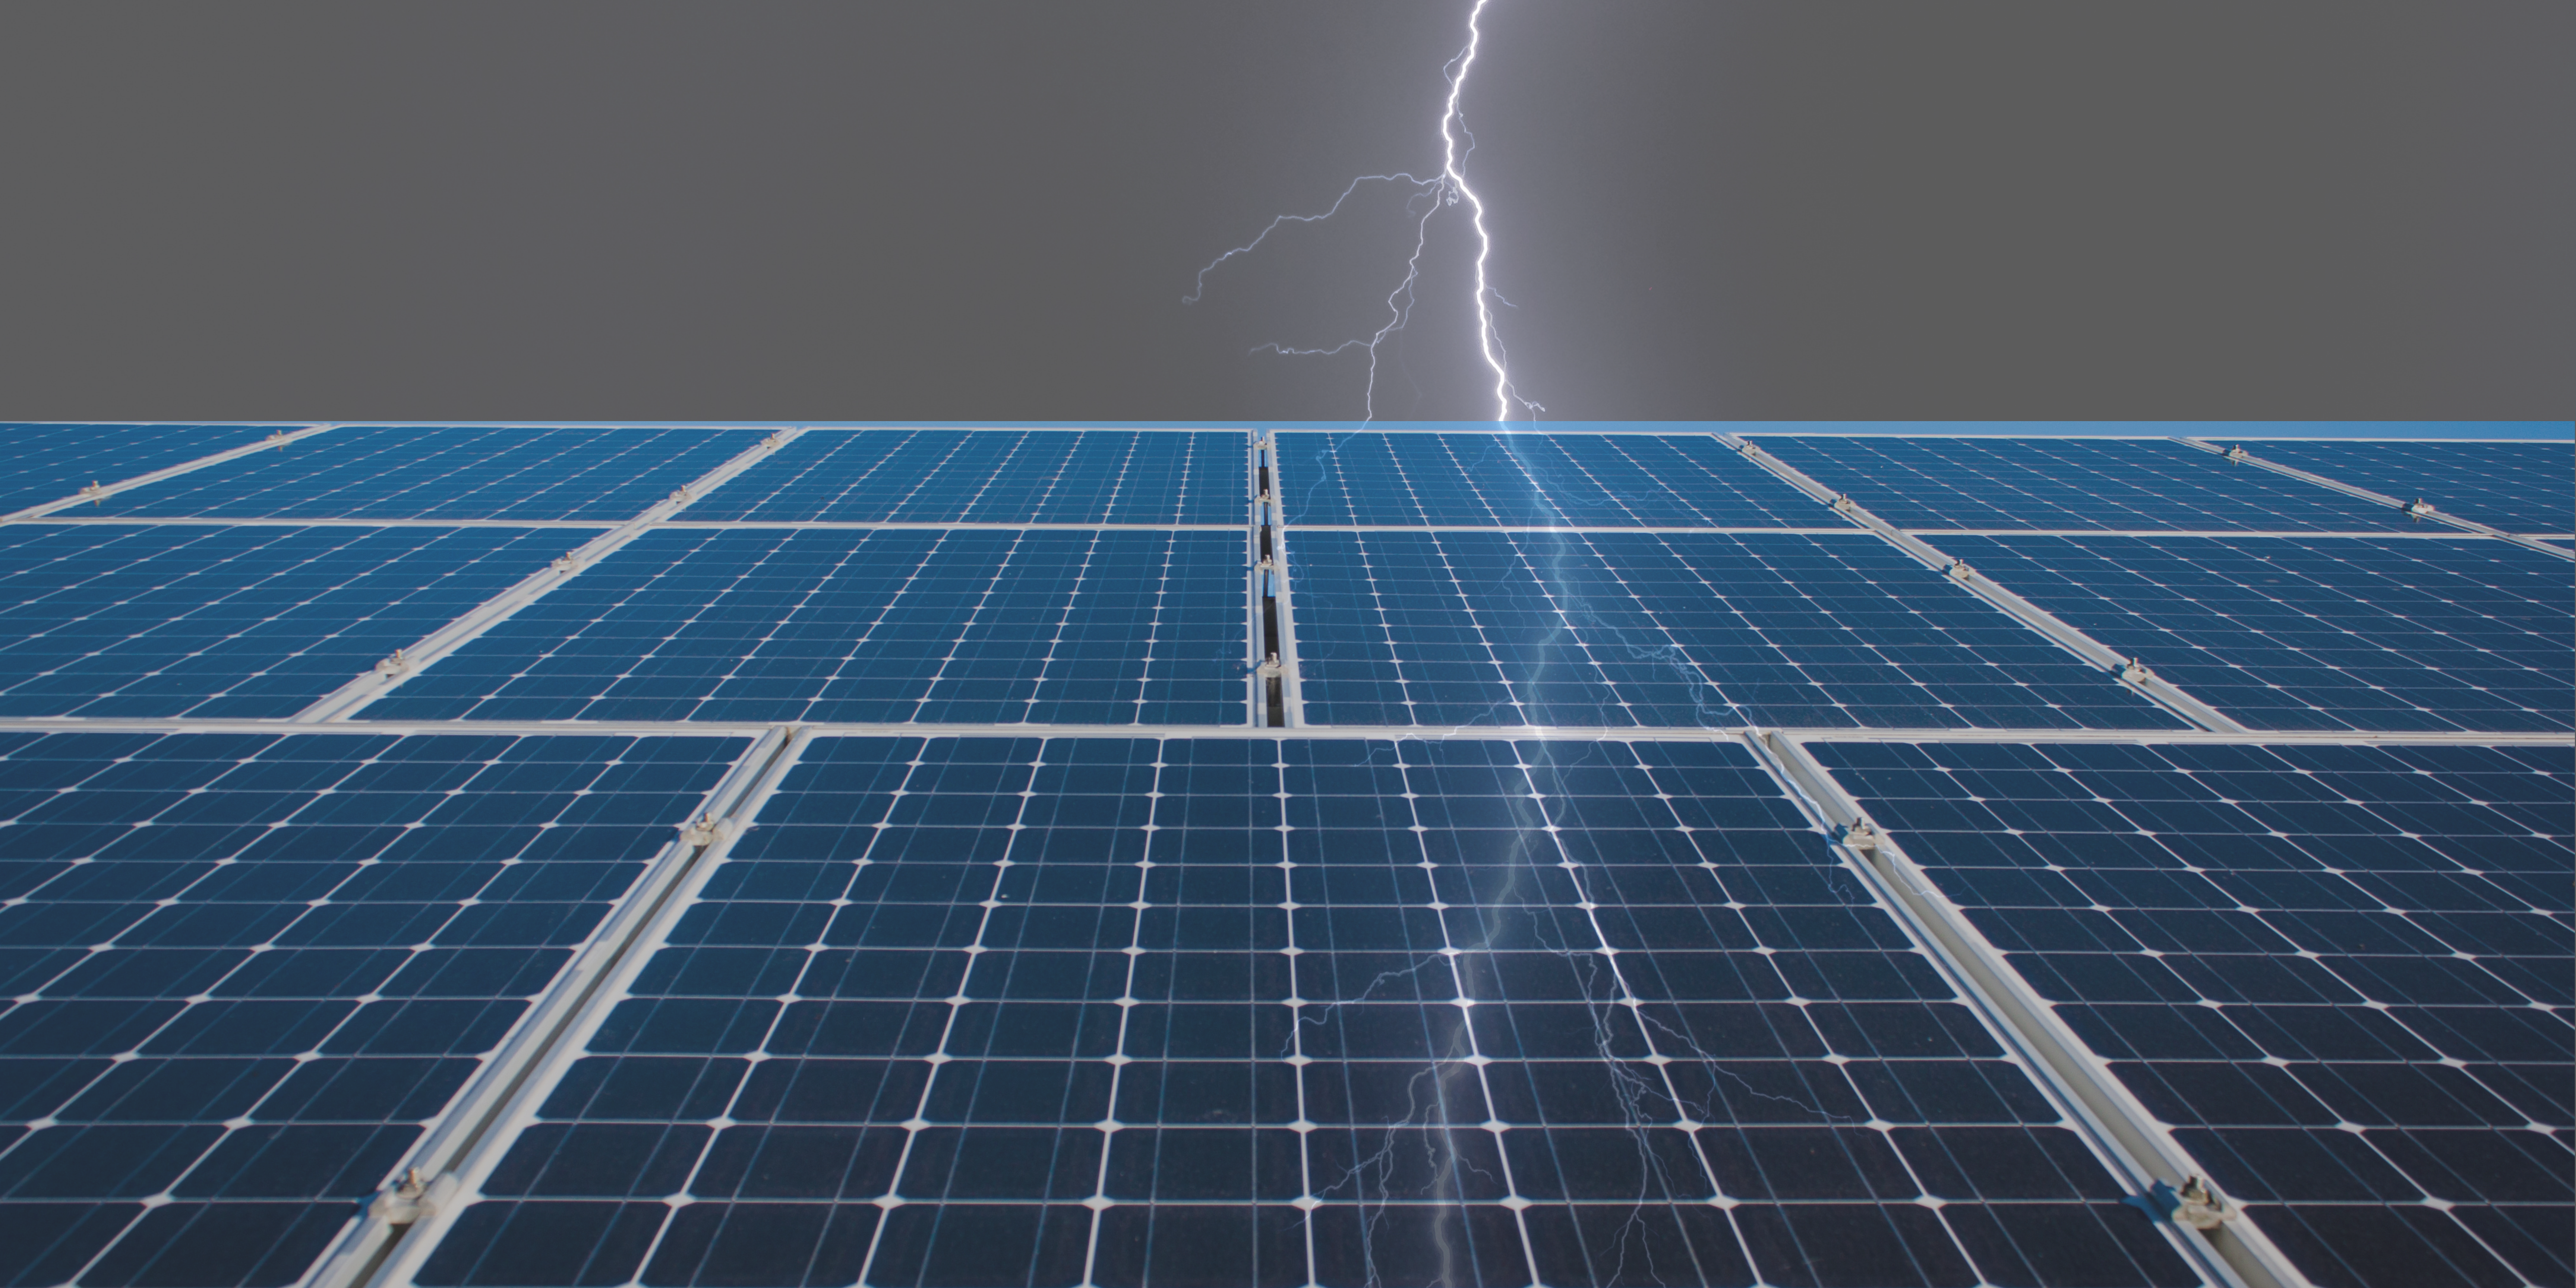 Lightning striking solar panels.